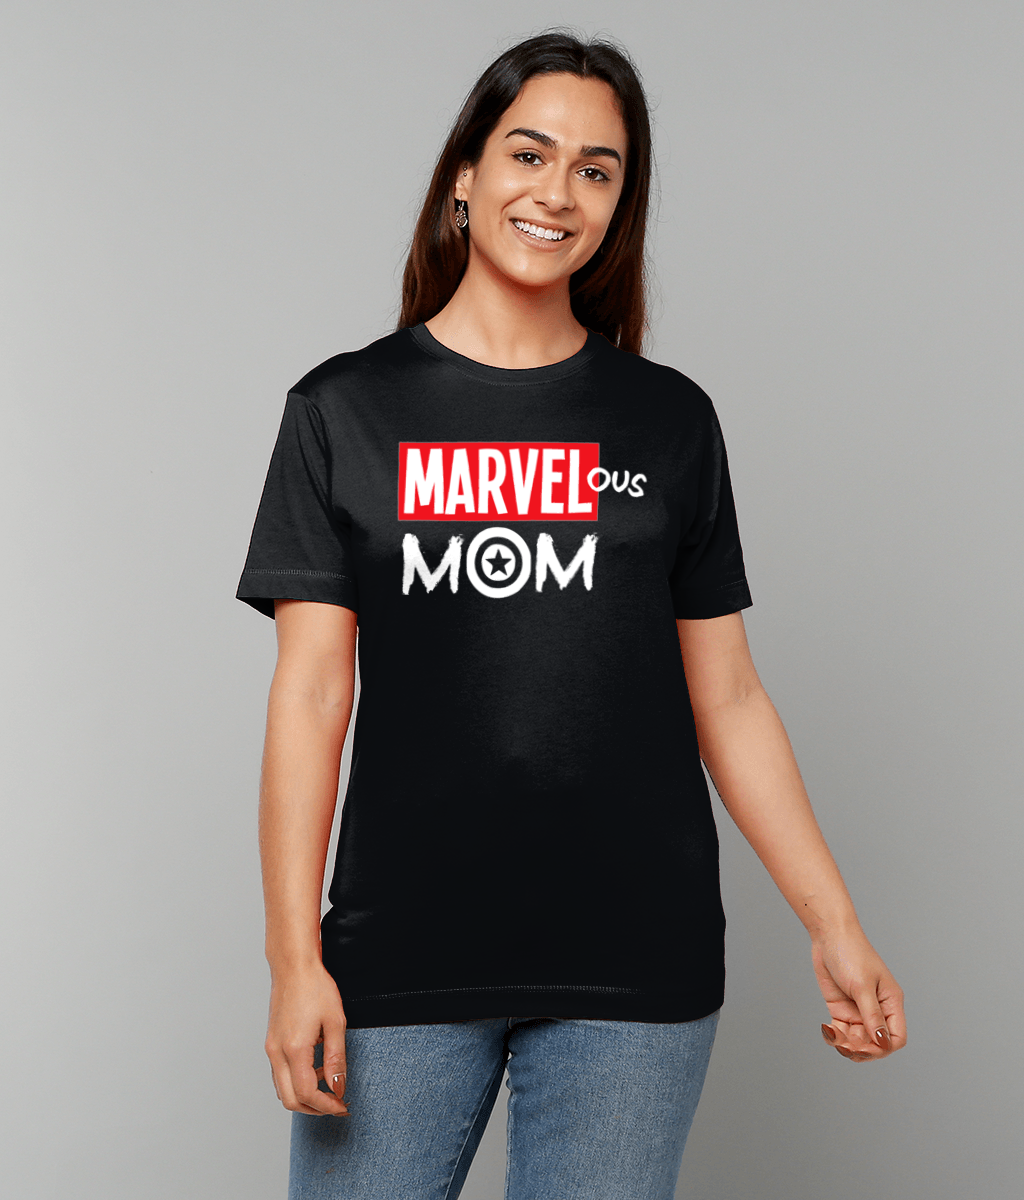 Marvel-ous Mom: Black T-Shirt